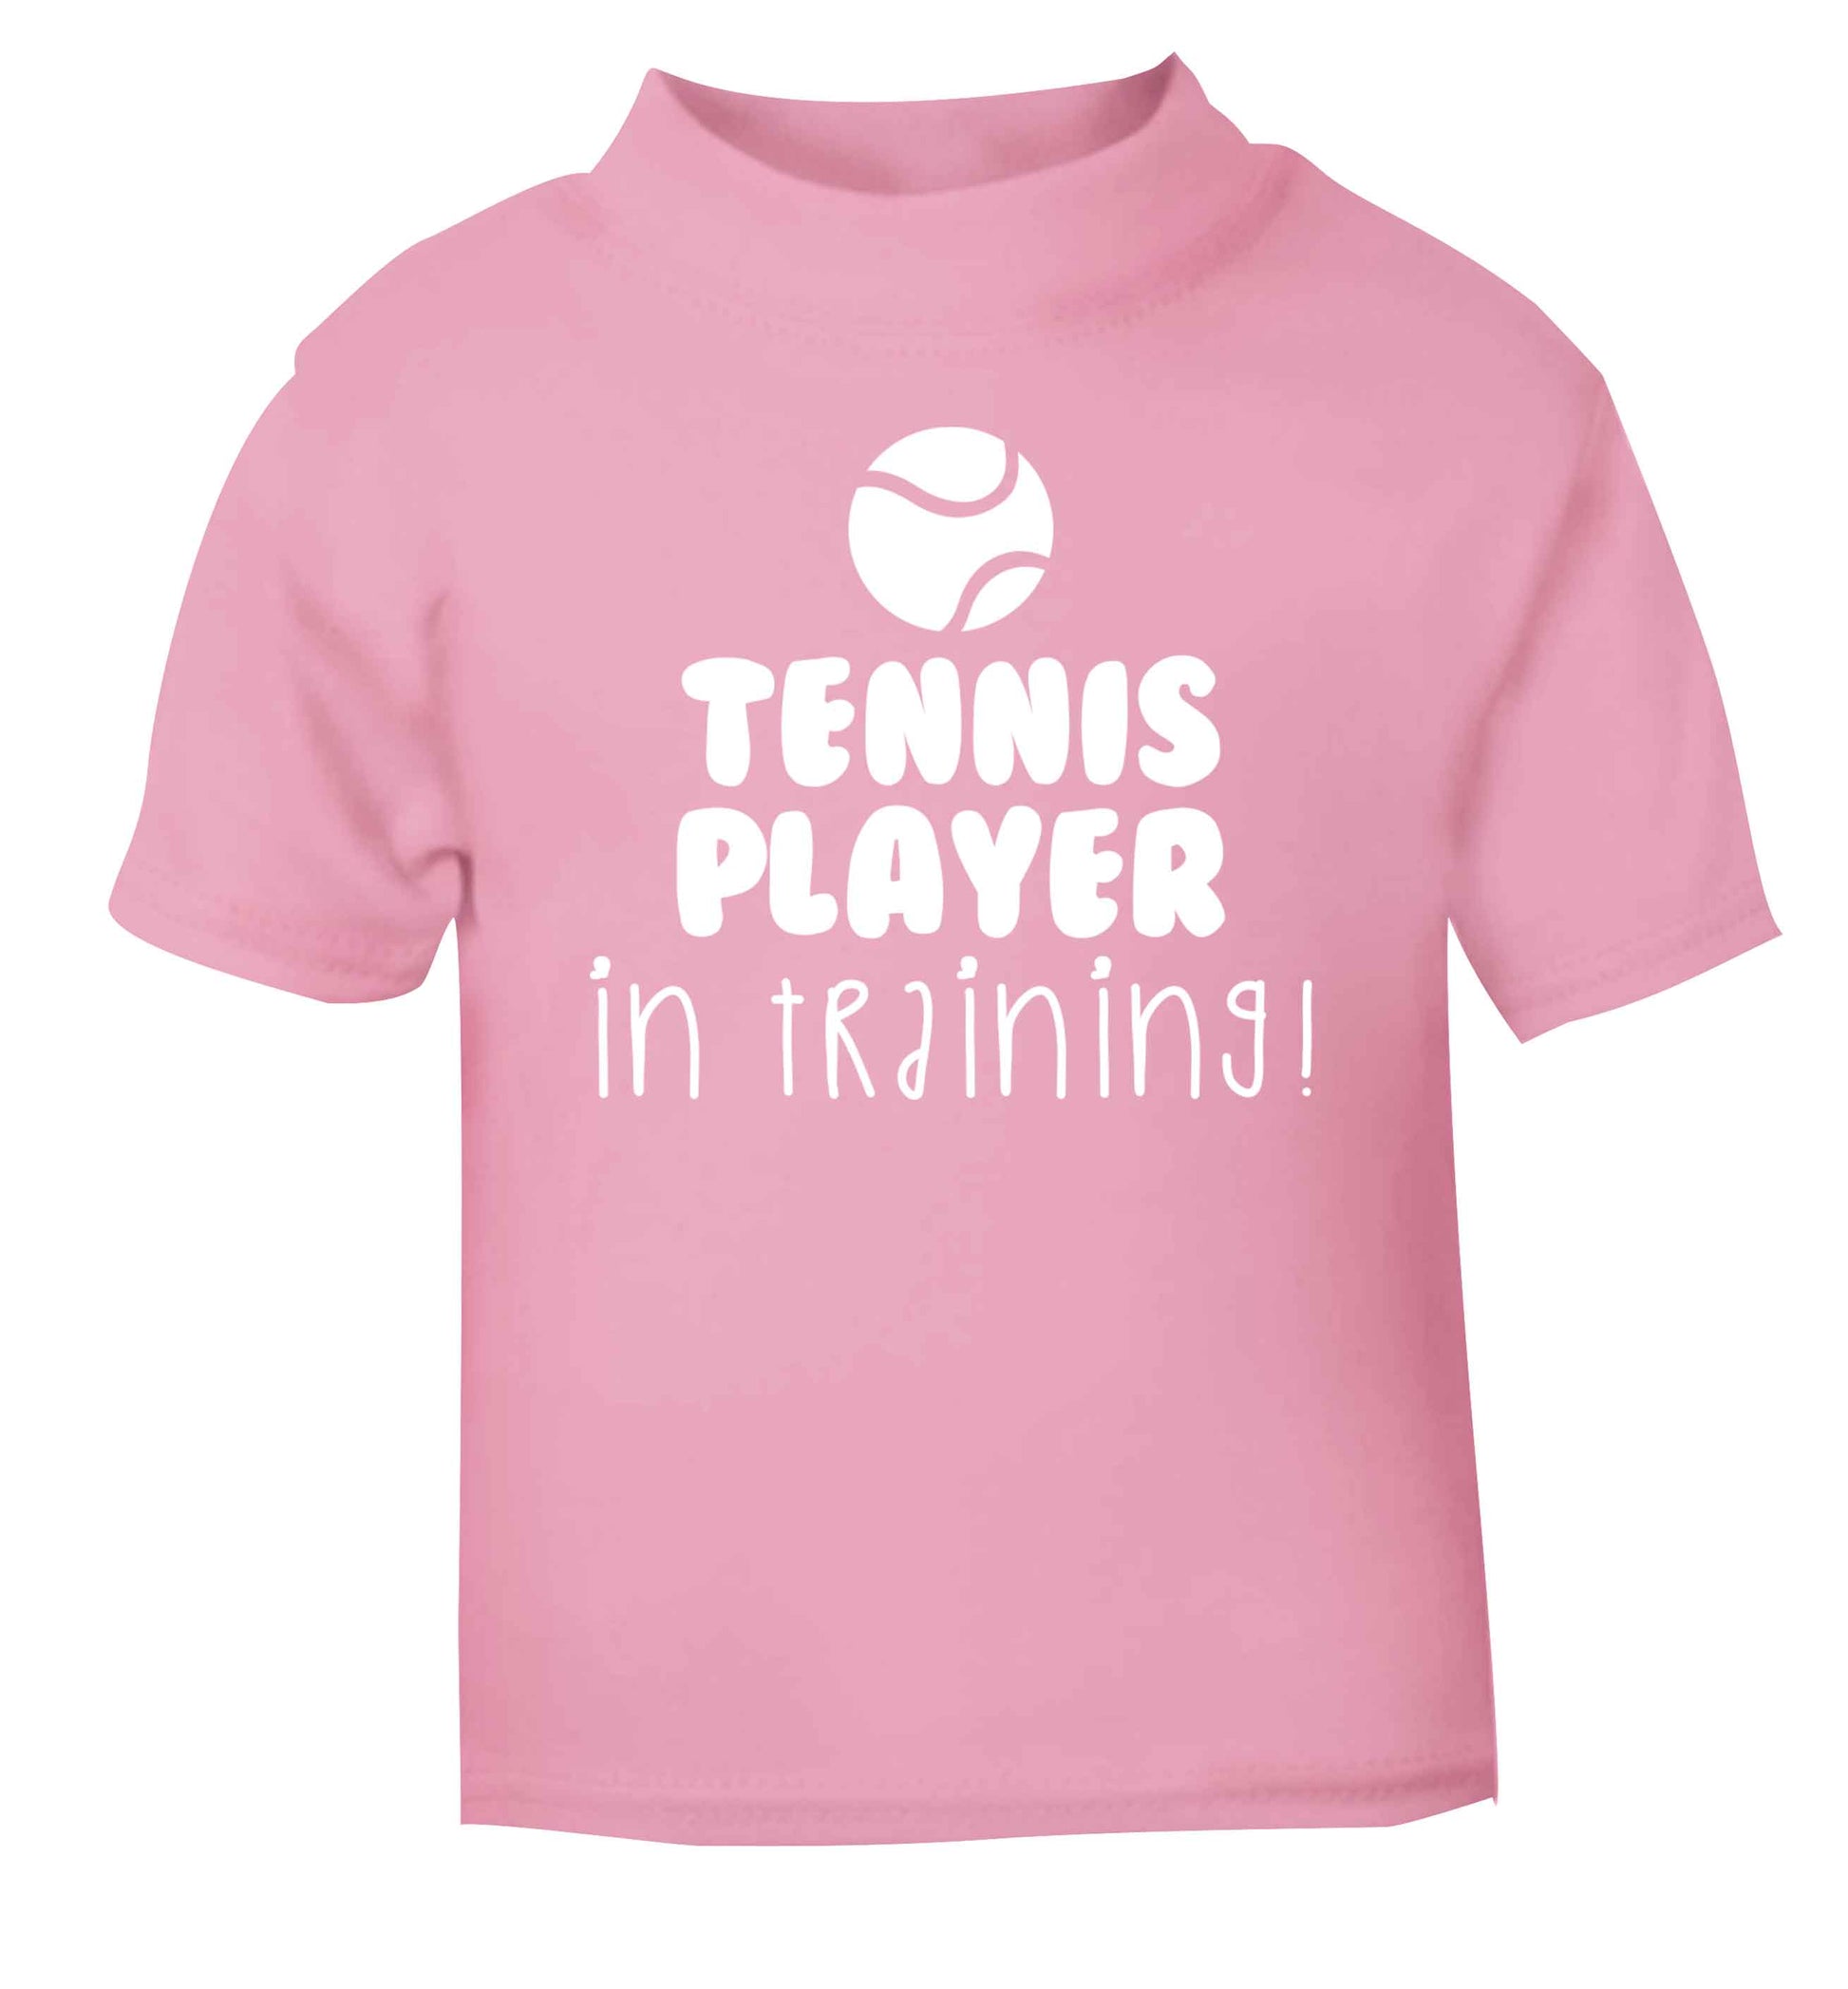 Tennis player in training light pink Baby Toddler Tshirt 2 Years